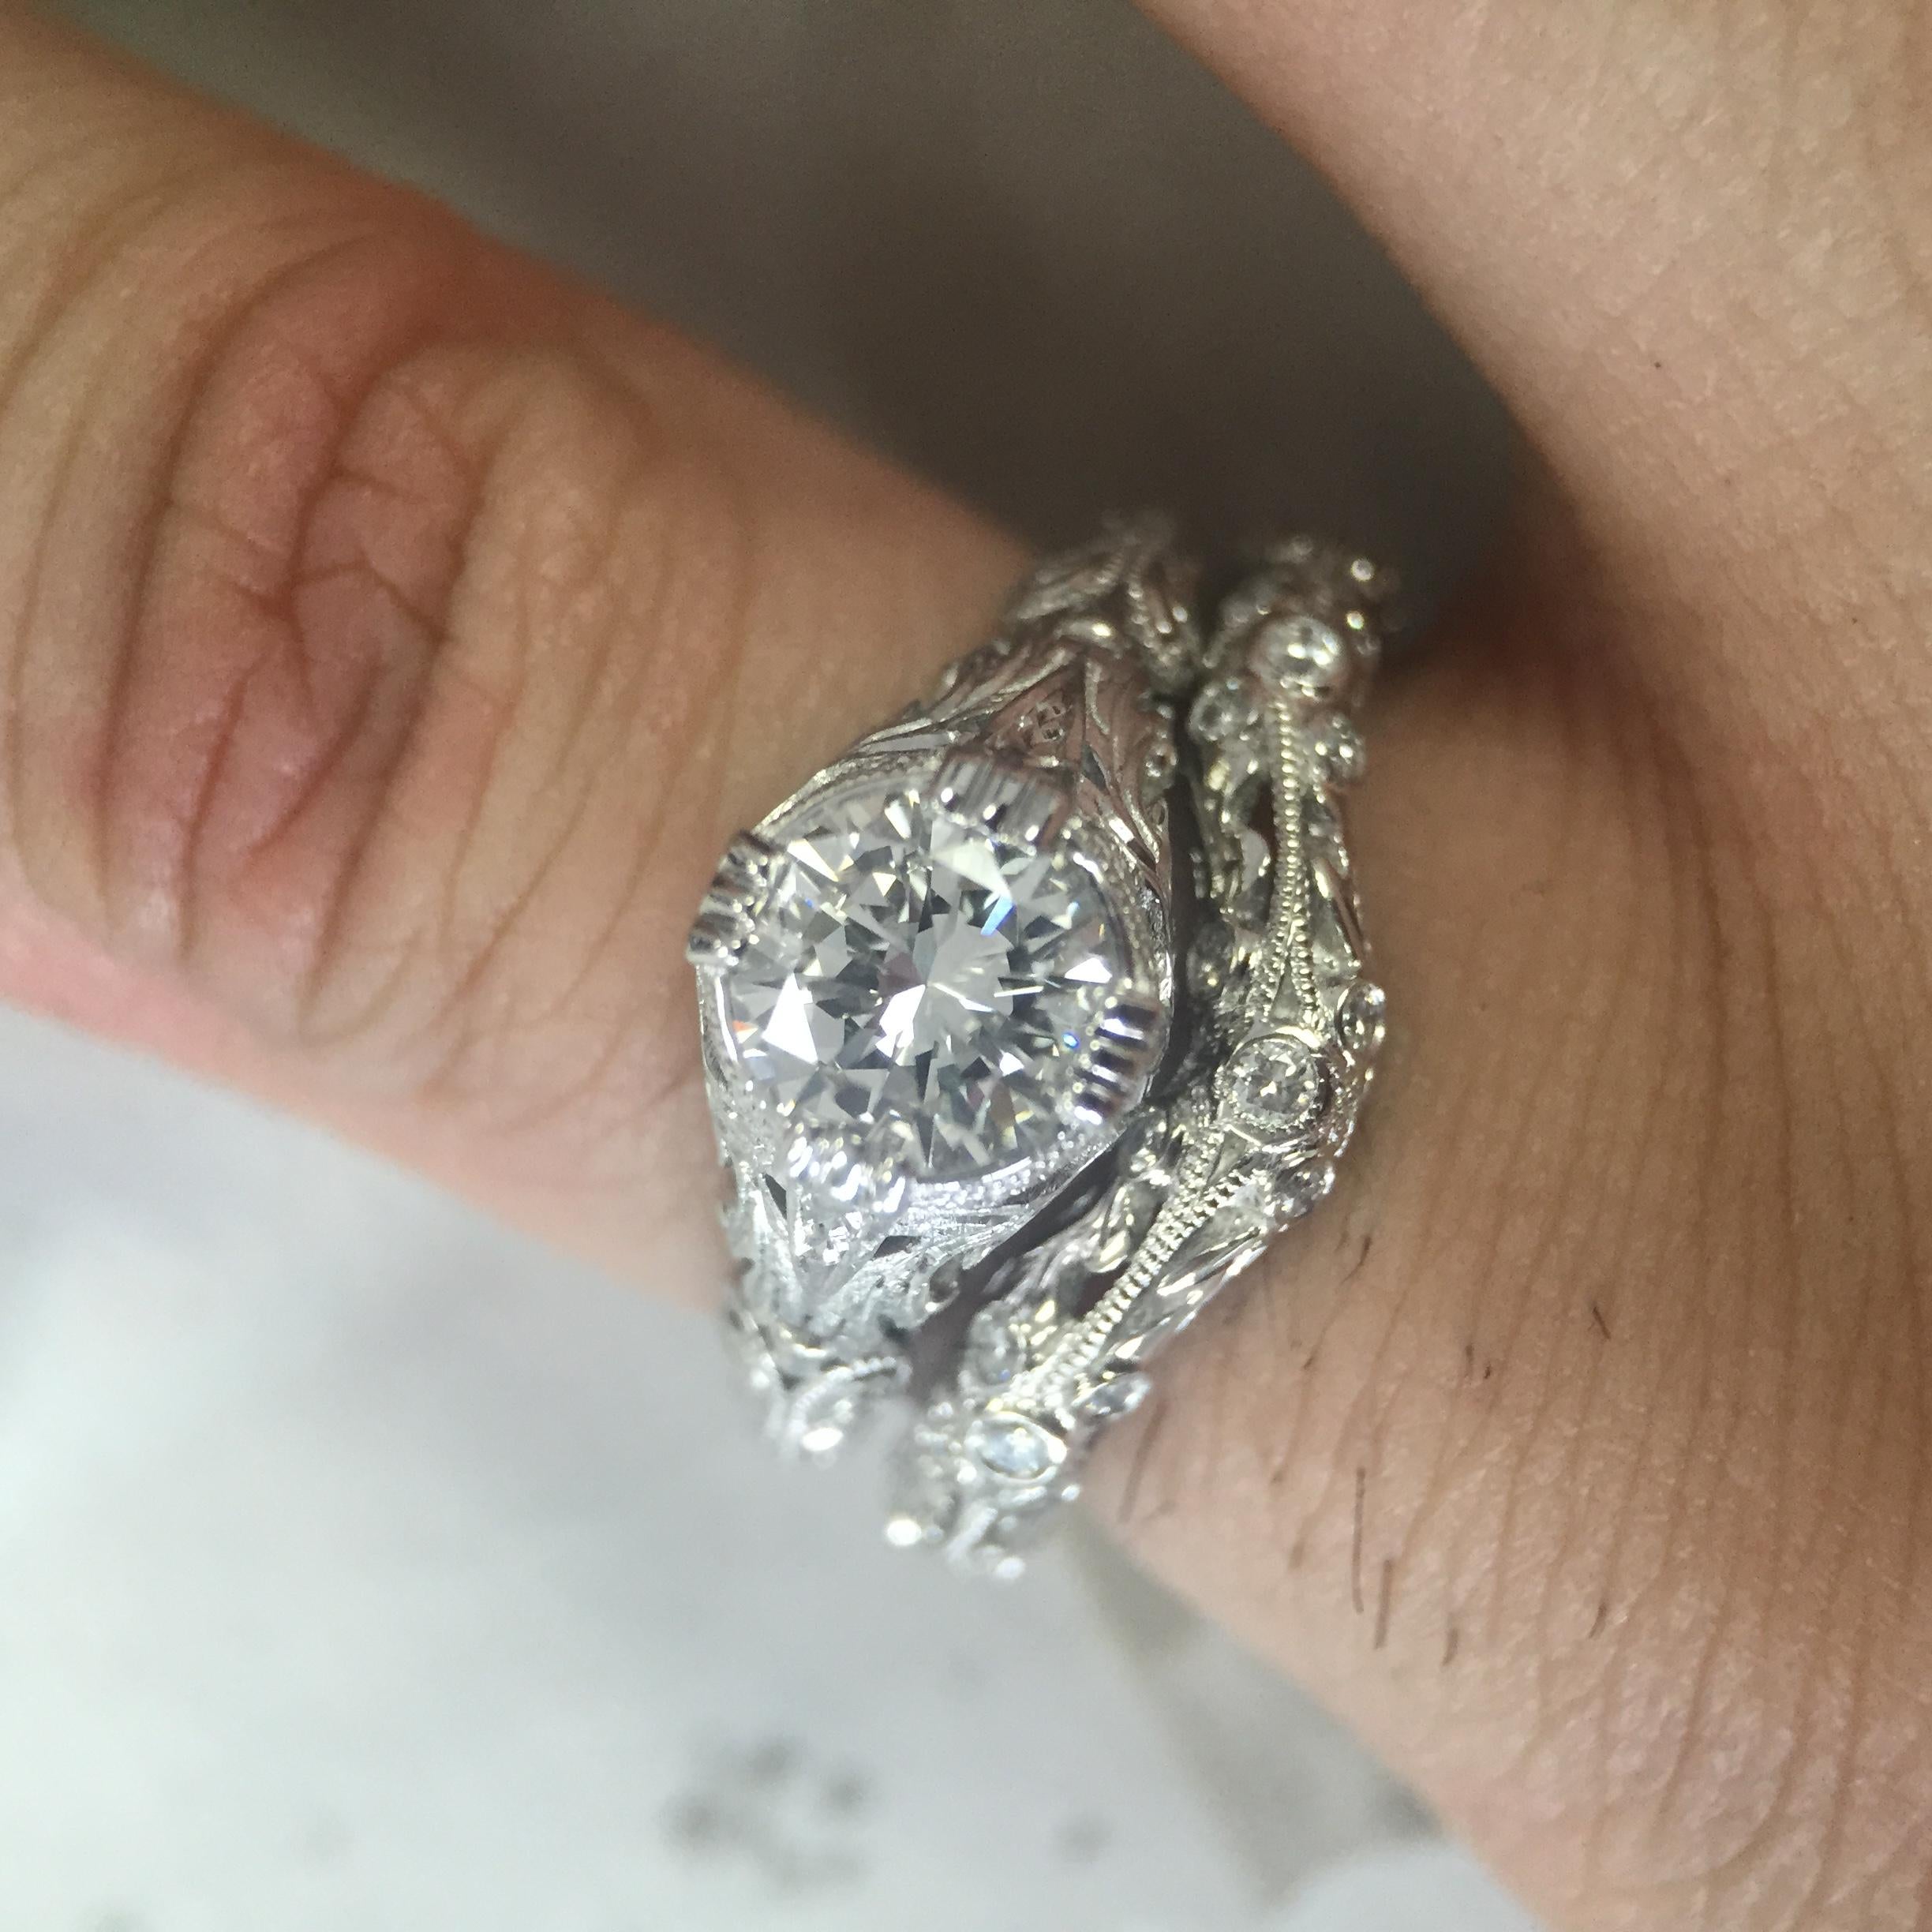 1.5 carat diamond ring on hand